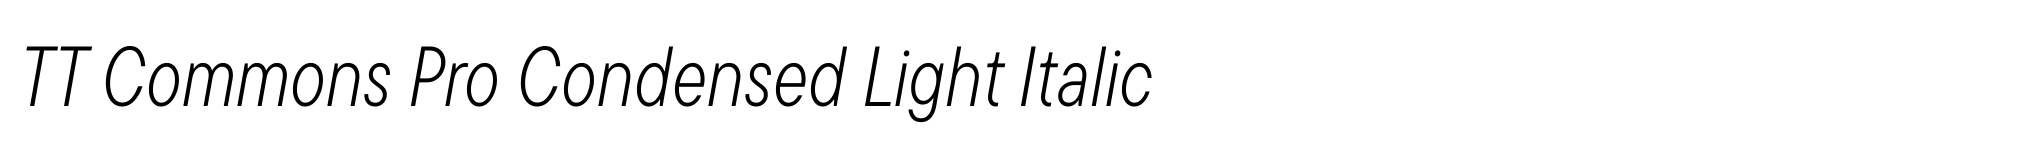 TT Commons Pro Condensed Light Italic image